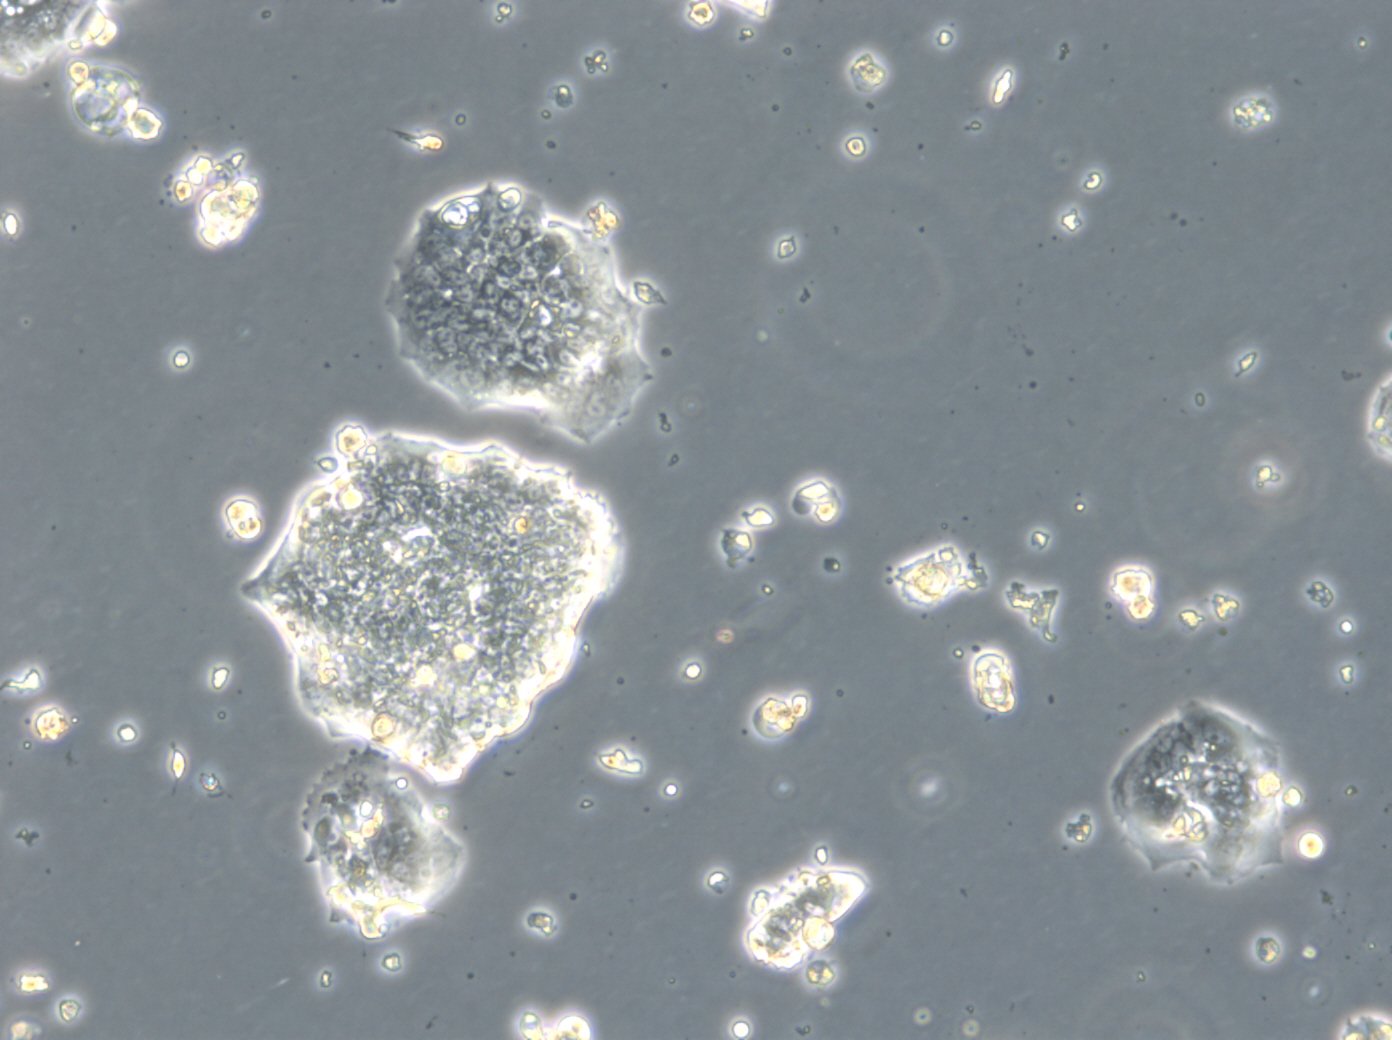 HROC126 Cells